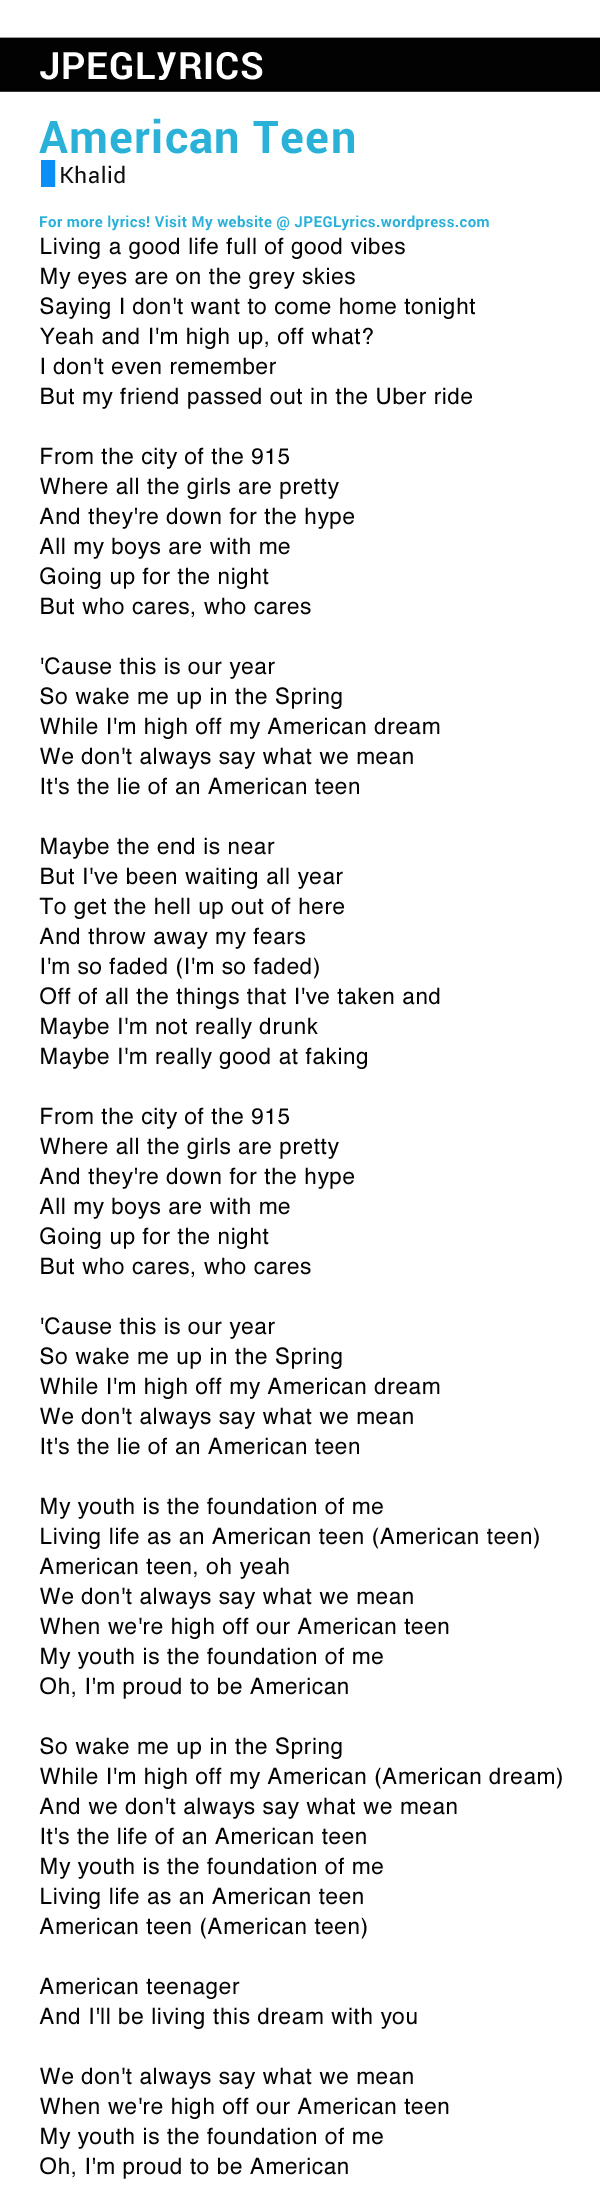 American Teen By Khalid Lyrics